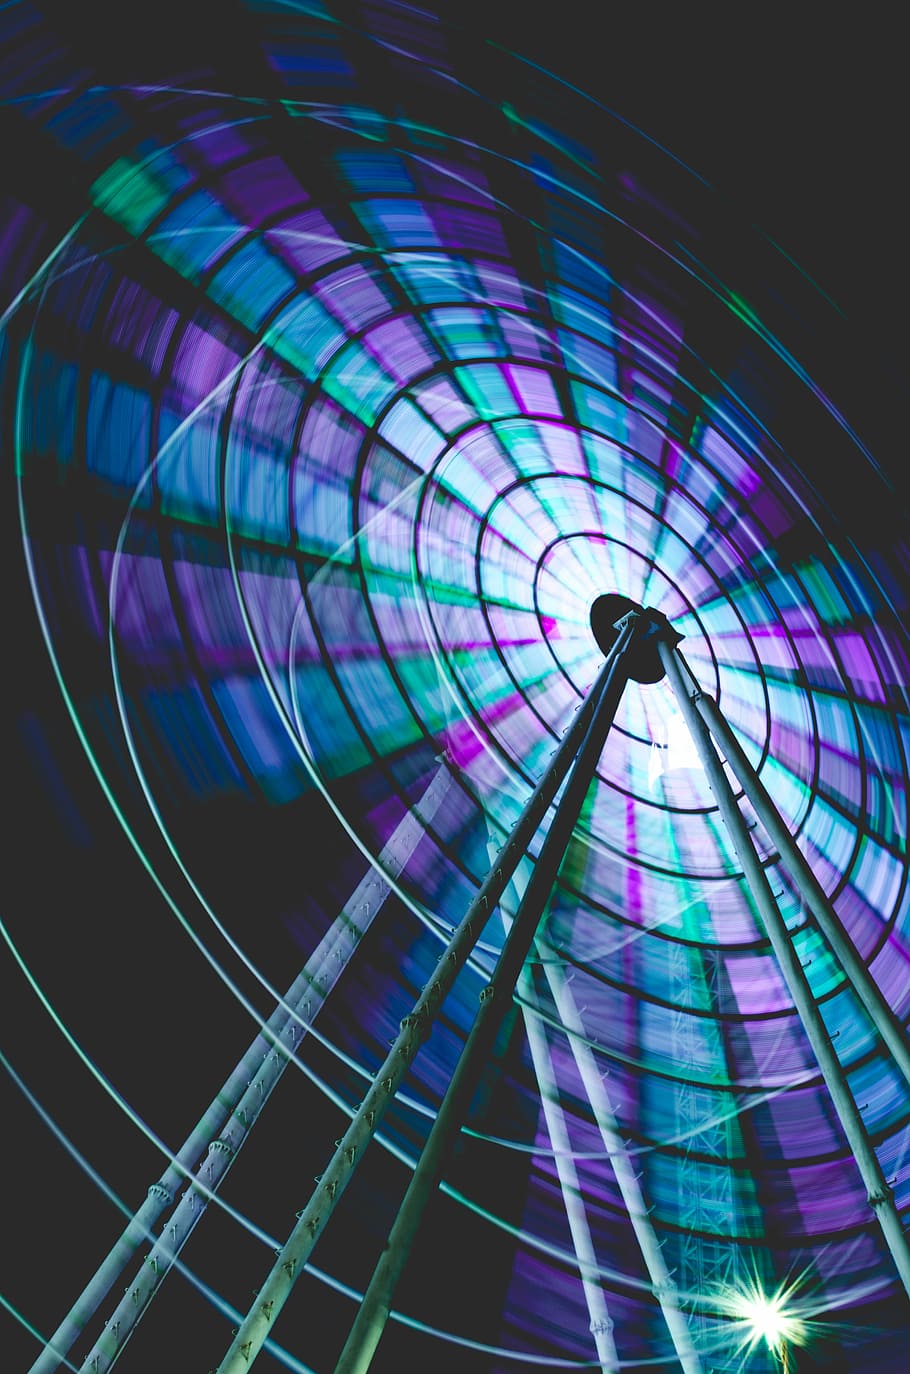 timelapse photo of ferris wheel, purple, green, and blue lighted ferris wheel